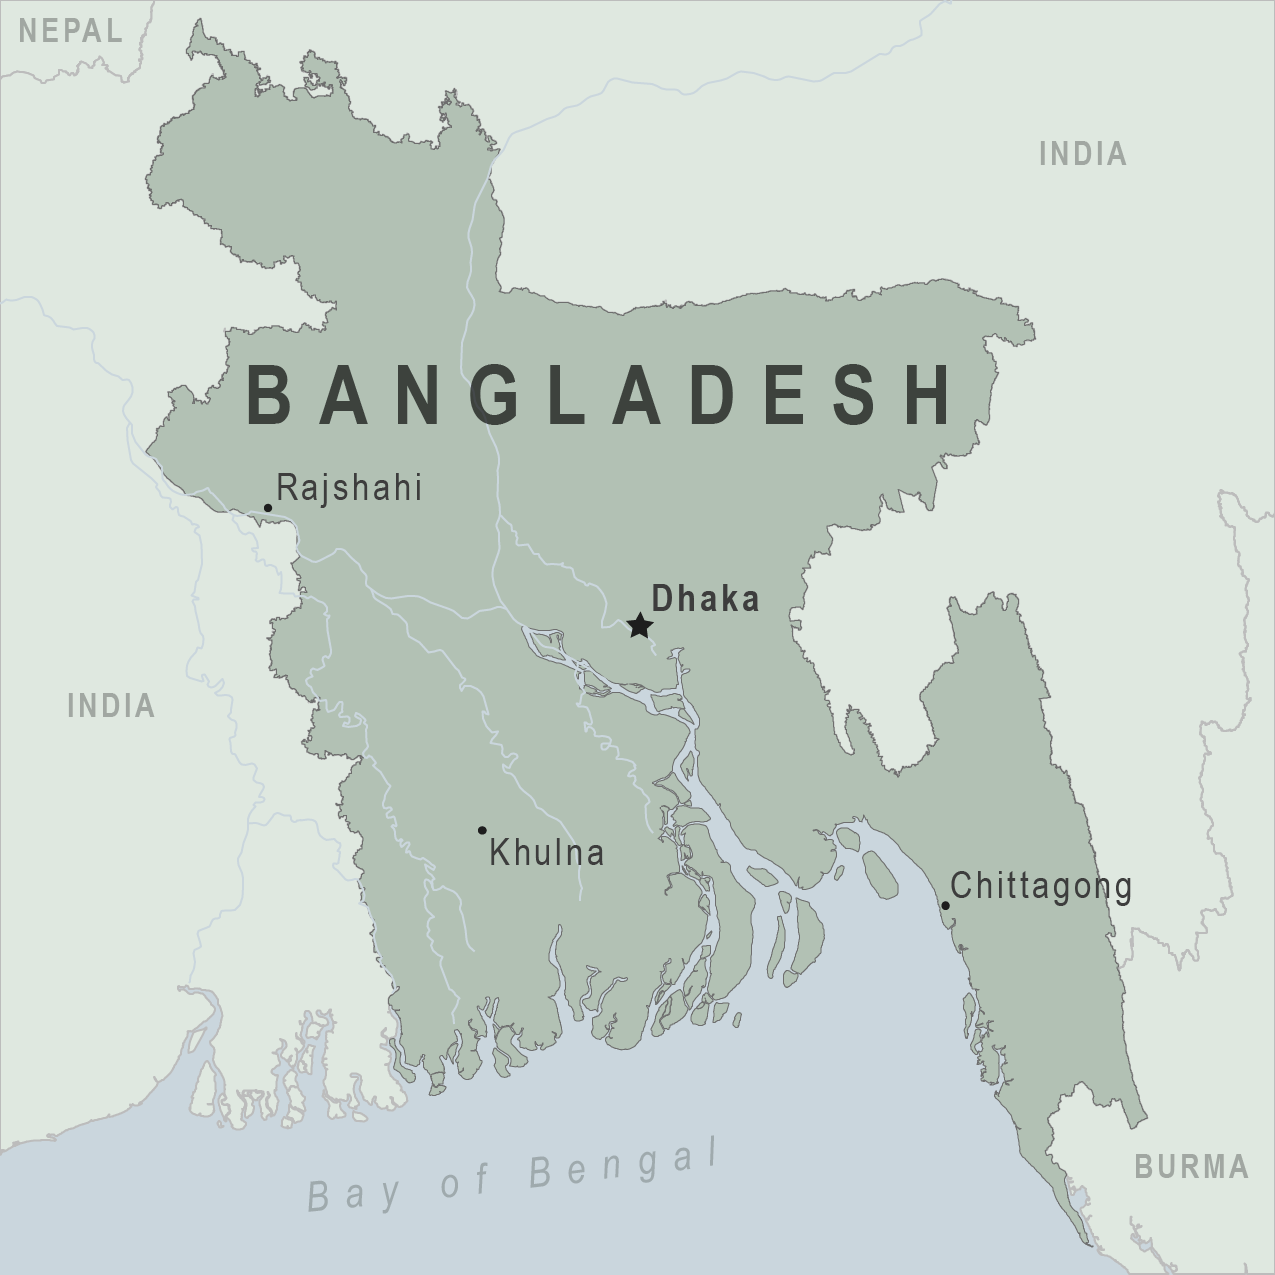 (http://wwwnc.cdc.gov/travel/images/map-bangladesh.jpg)